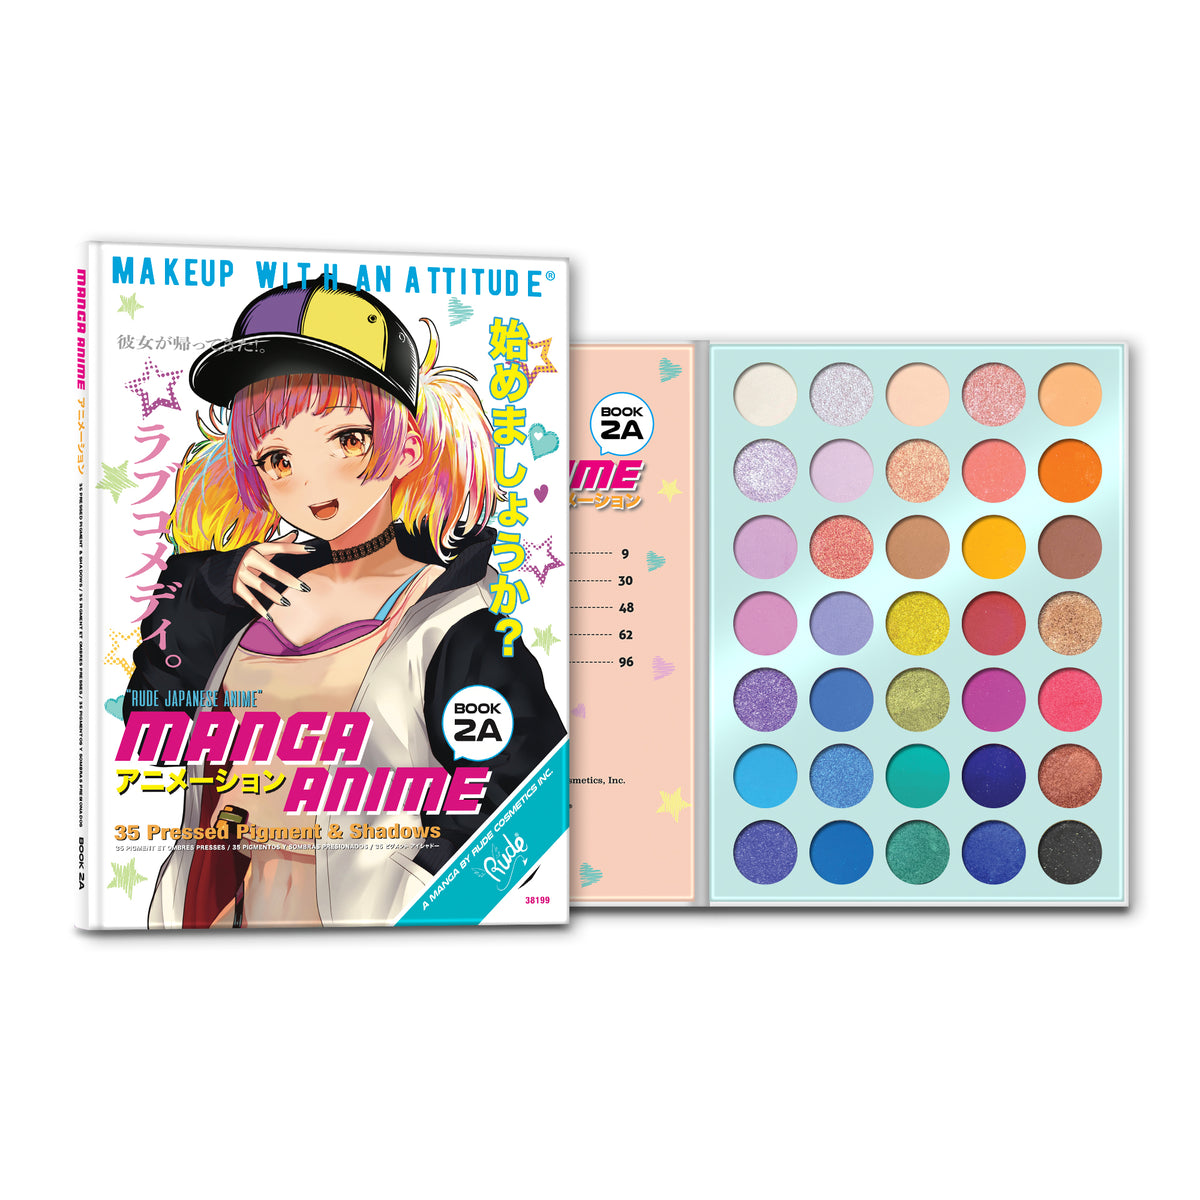 Manga Anime 35 Pressed Pigment & Shadows Book 2A